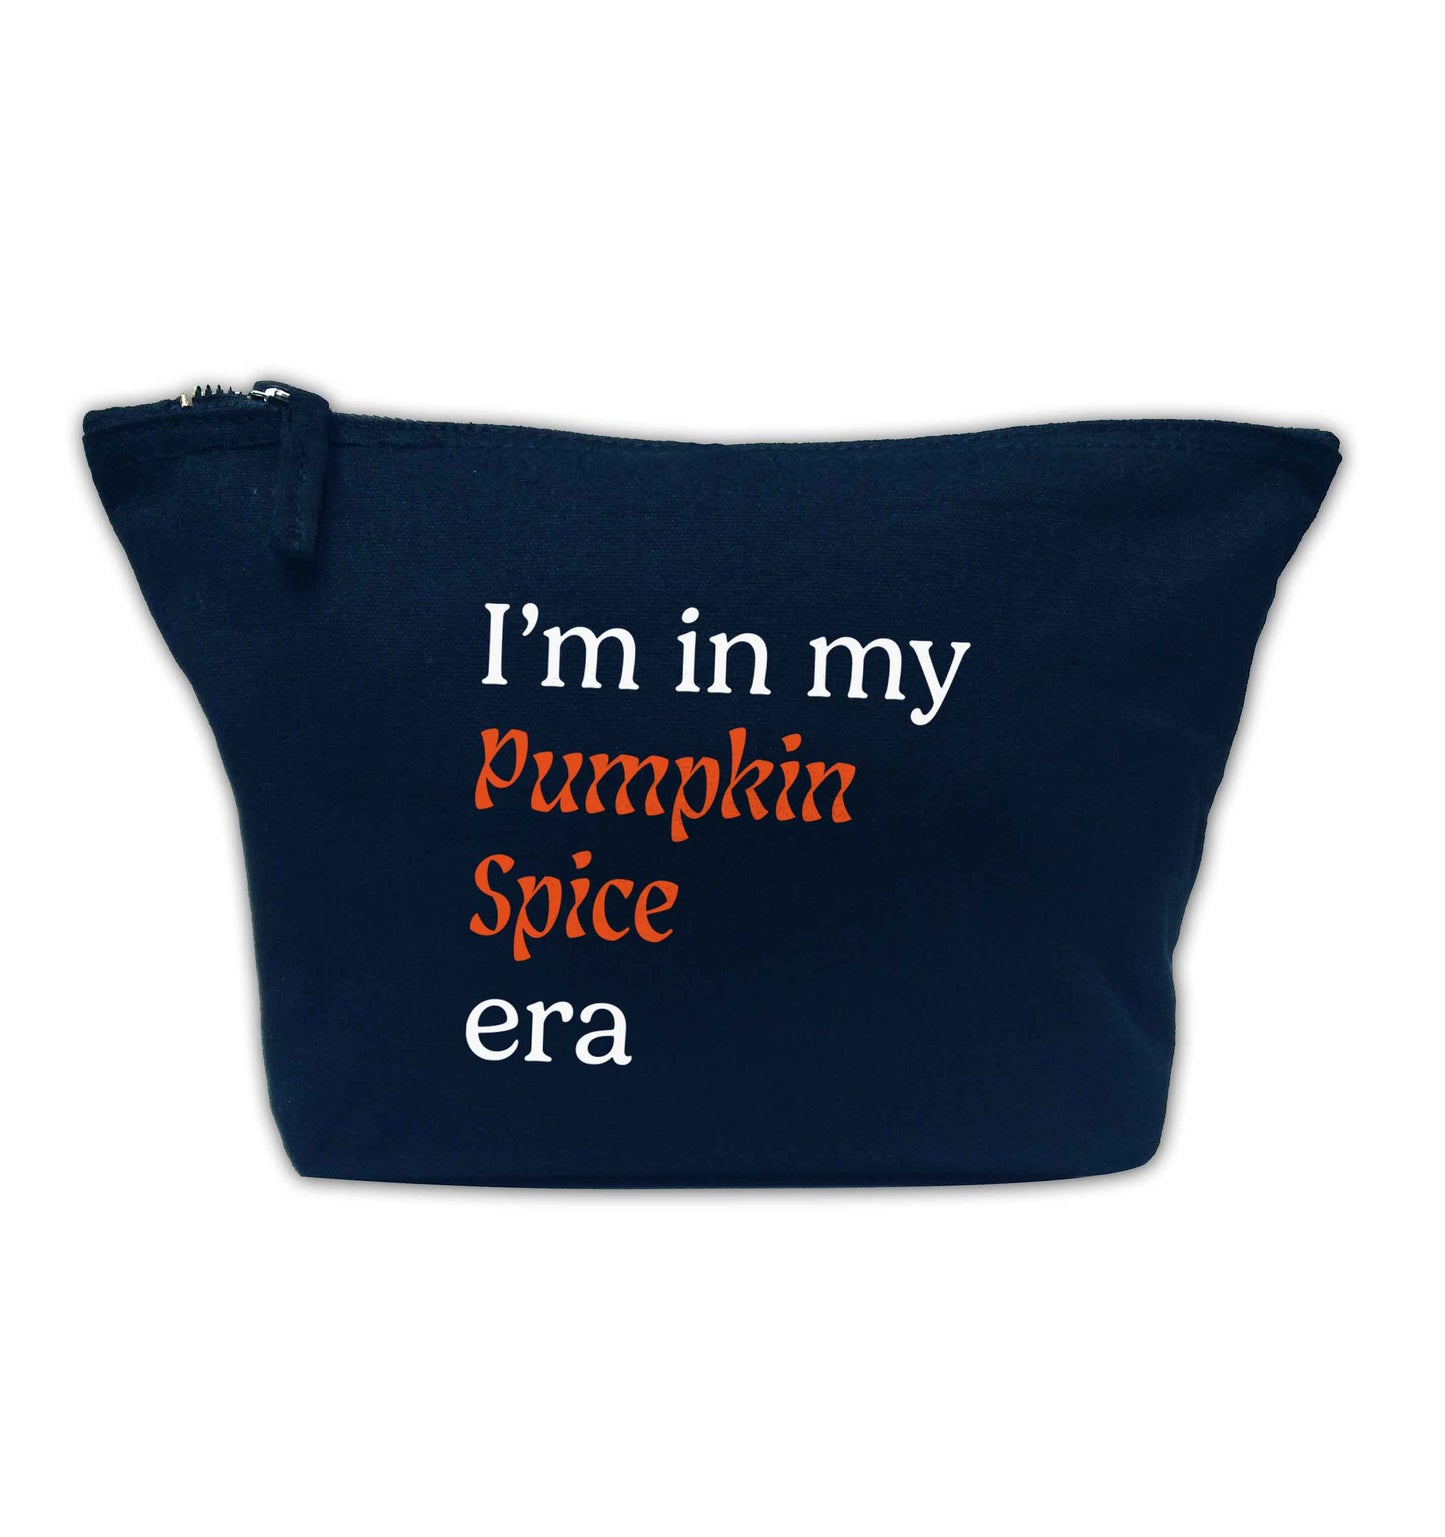 I'm in my pumpkin spice era Kit navy makeup bag